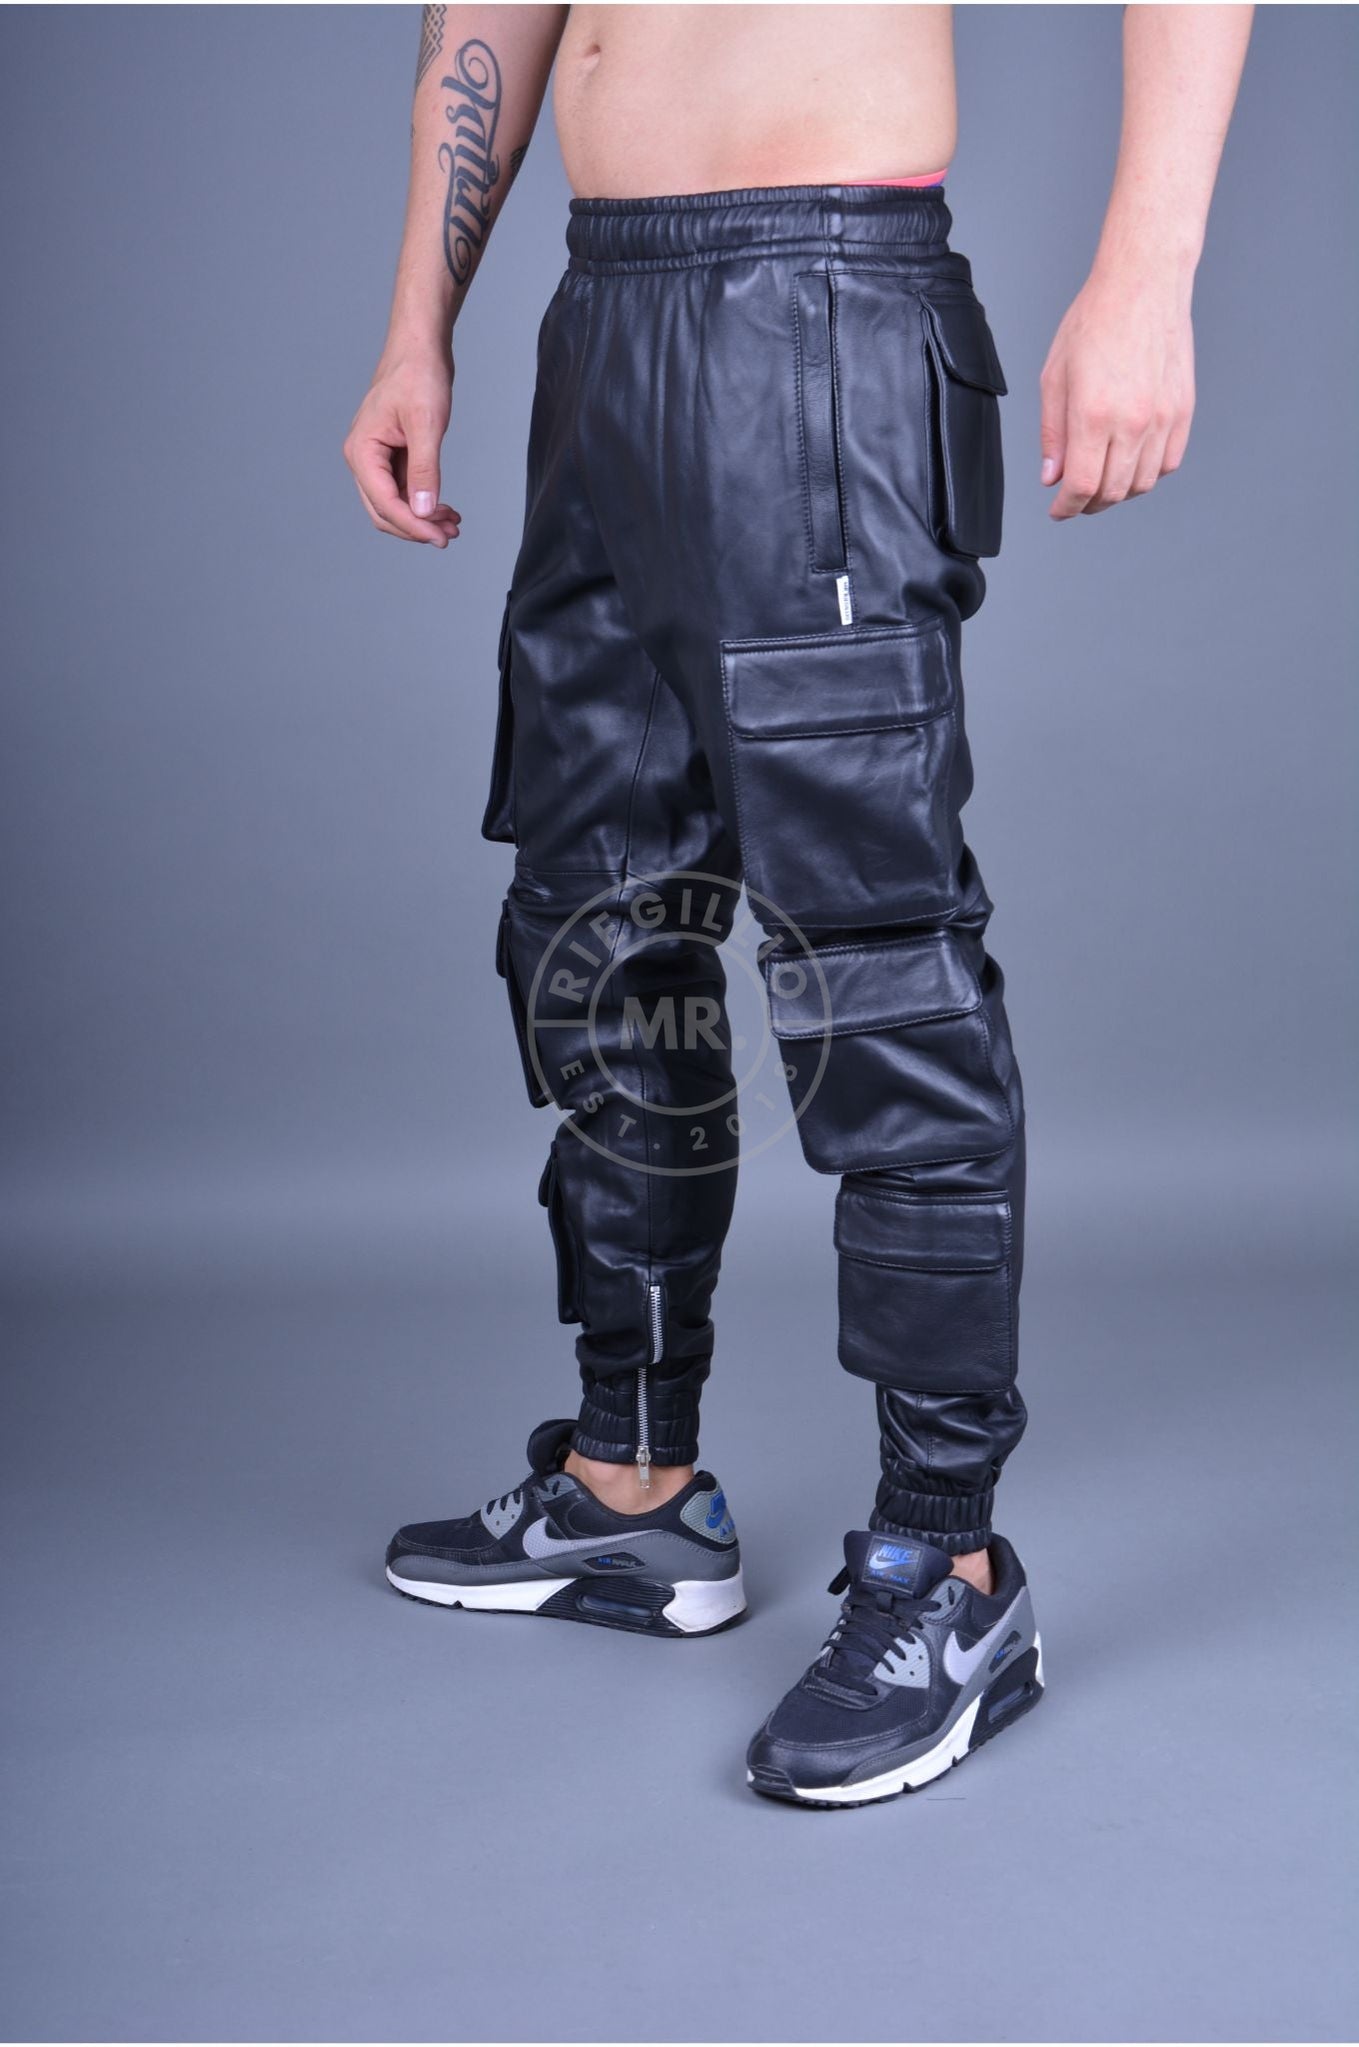 Black Leather Utility Pants-at MR. Riegillio